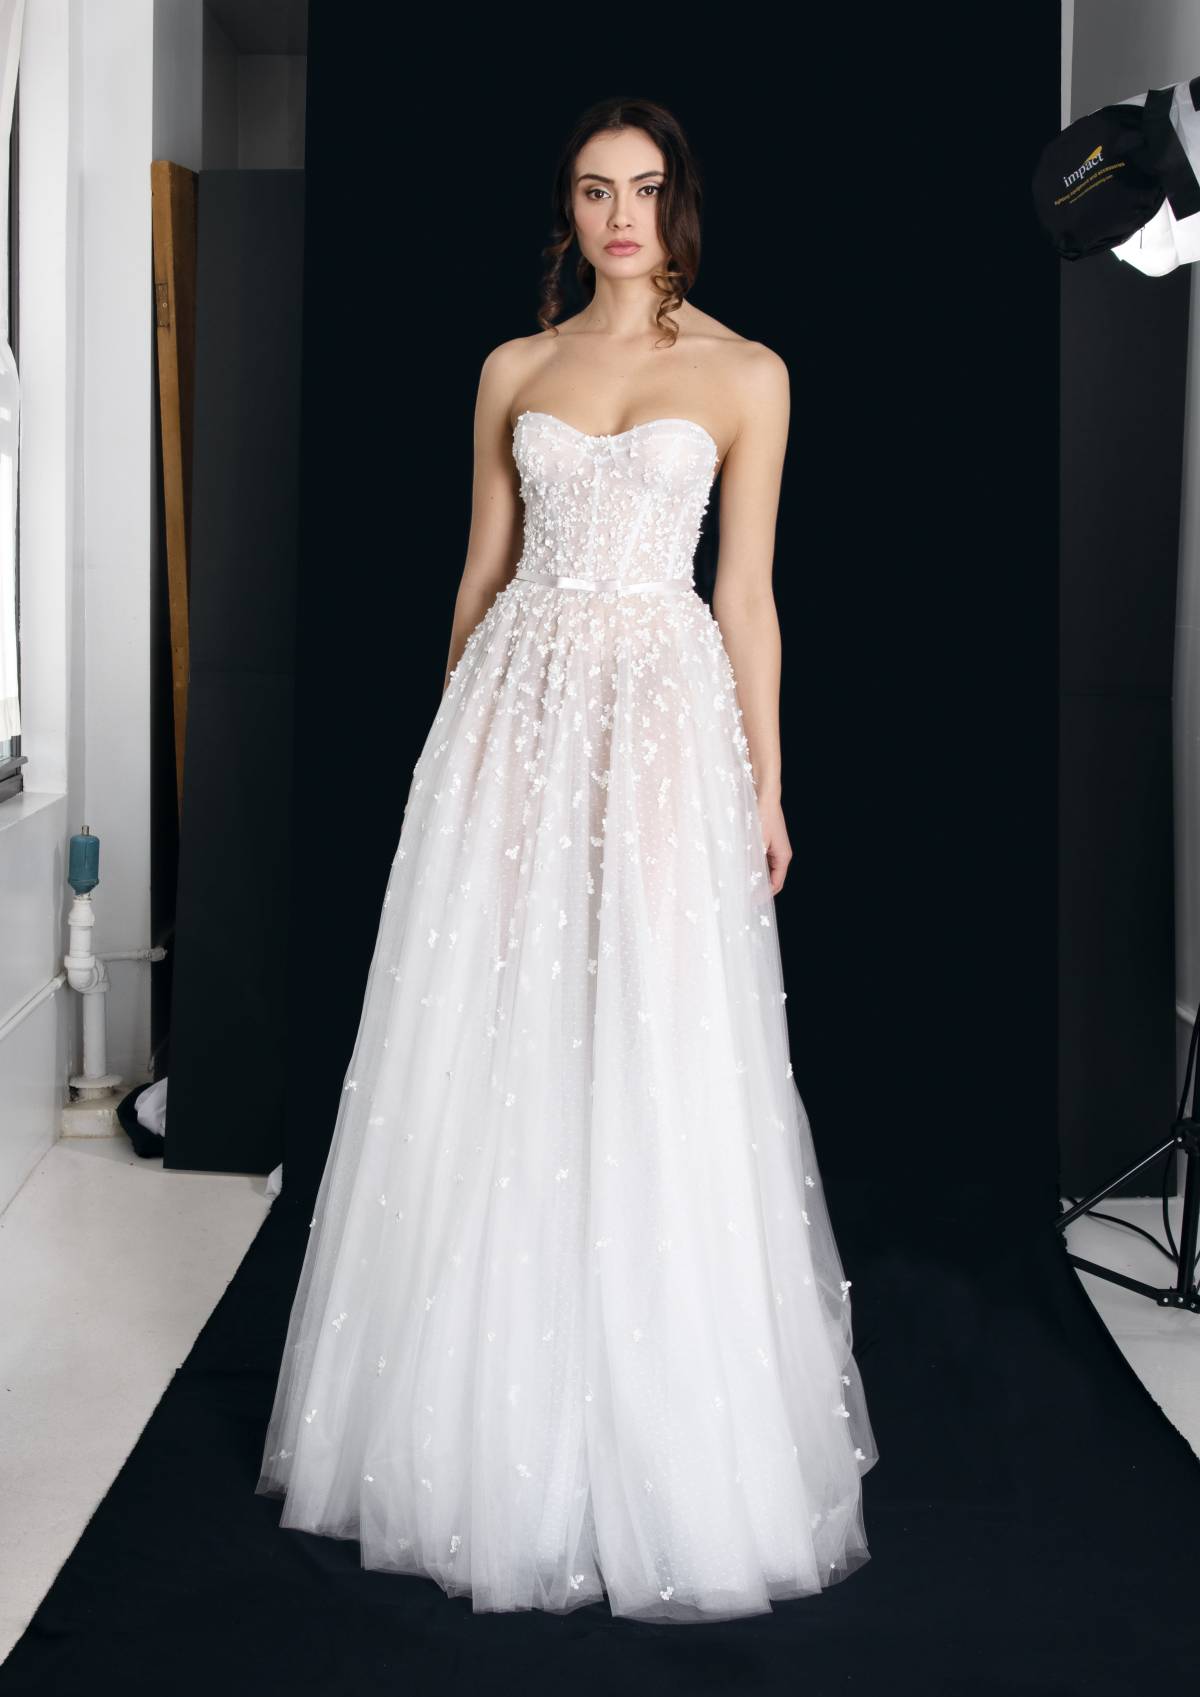 Nieve Wedding Dress - Verdin New York